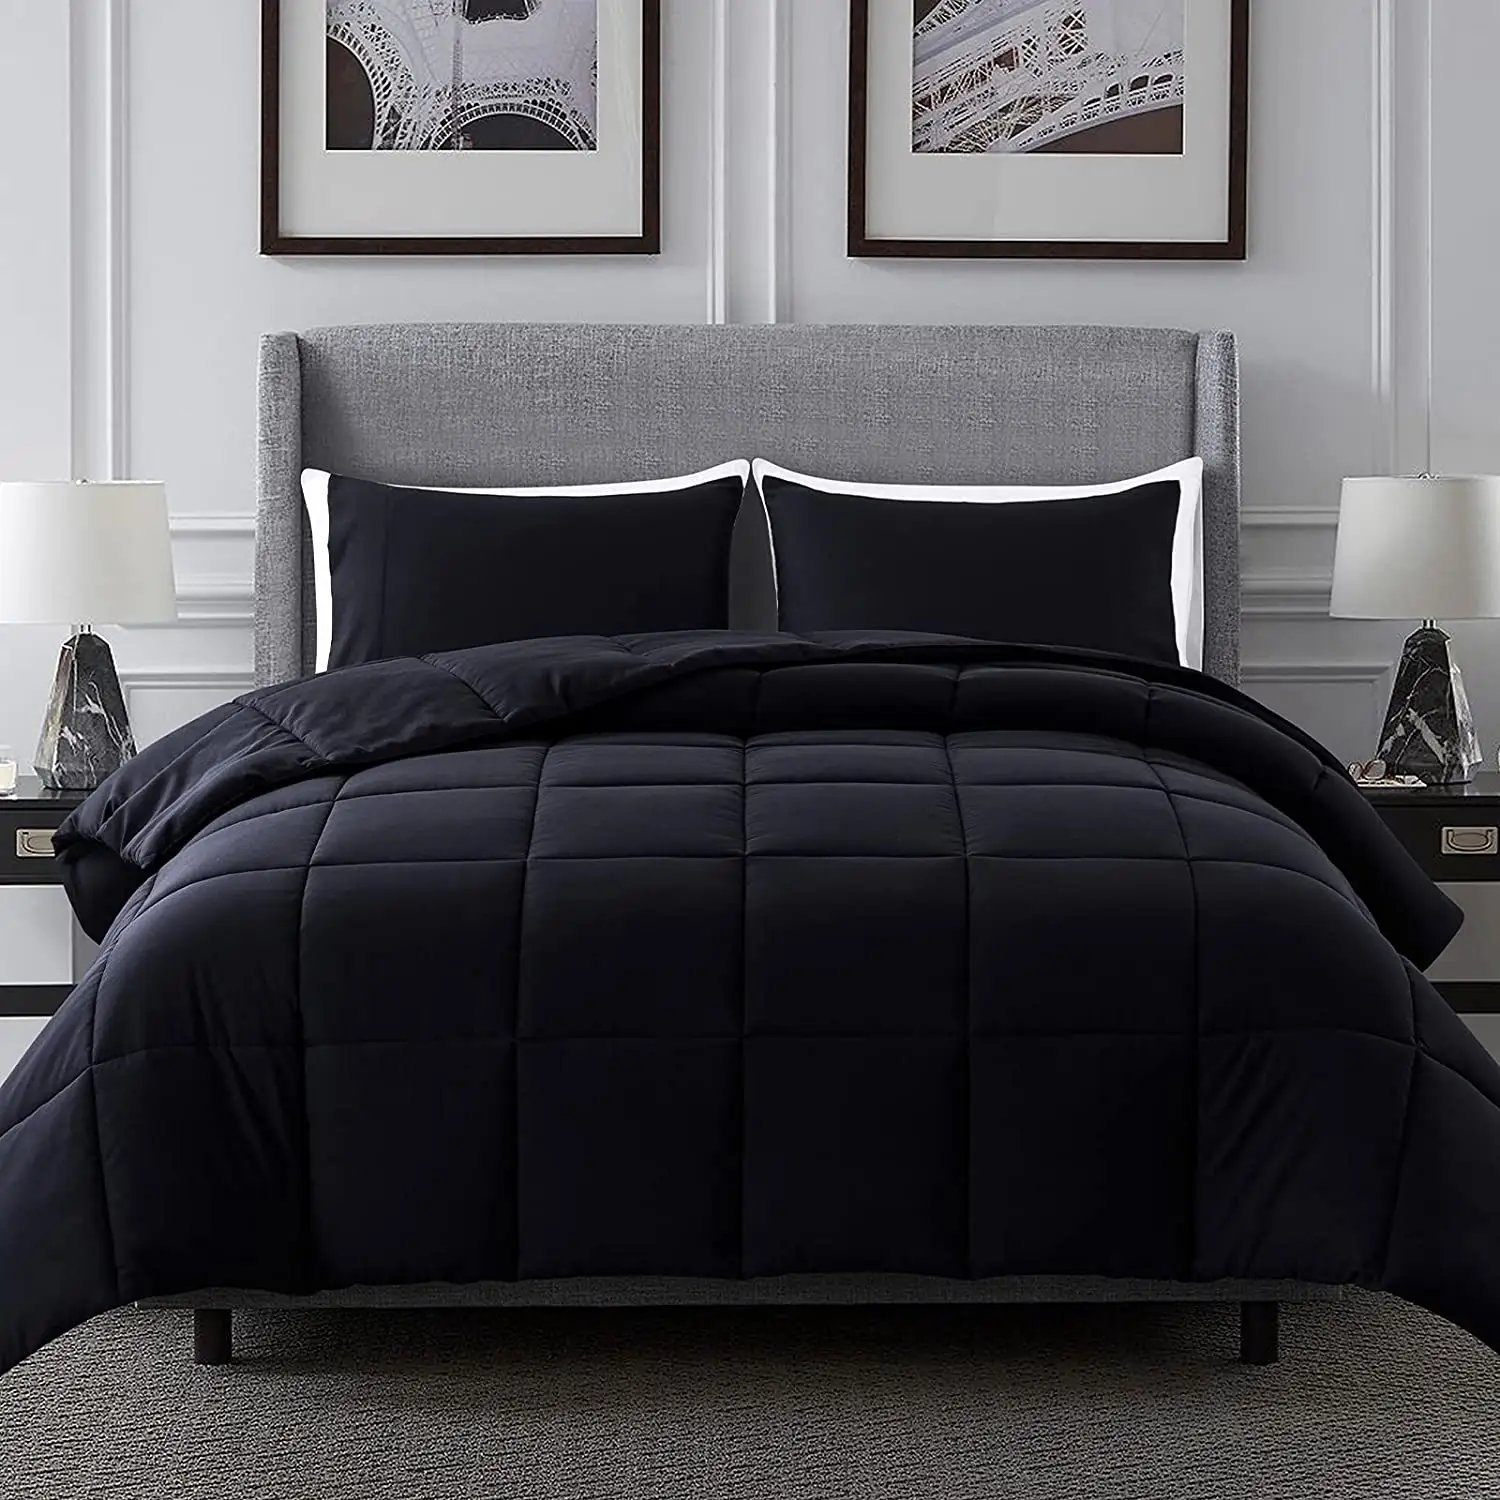 Wholesale Luxury Black Microfiber Hotel Cotton Blanket Customized Quilted Duvet Set Queen King Size Bedding Comforter